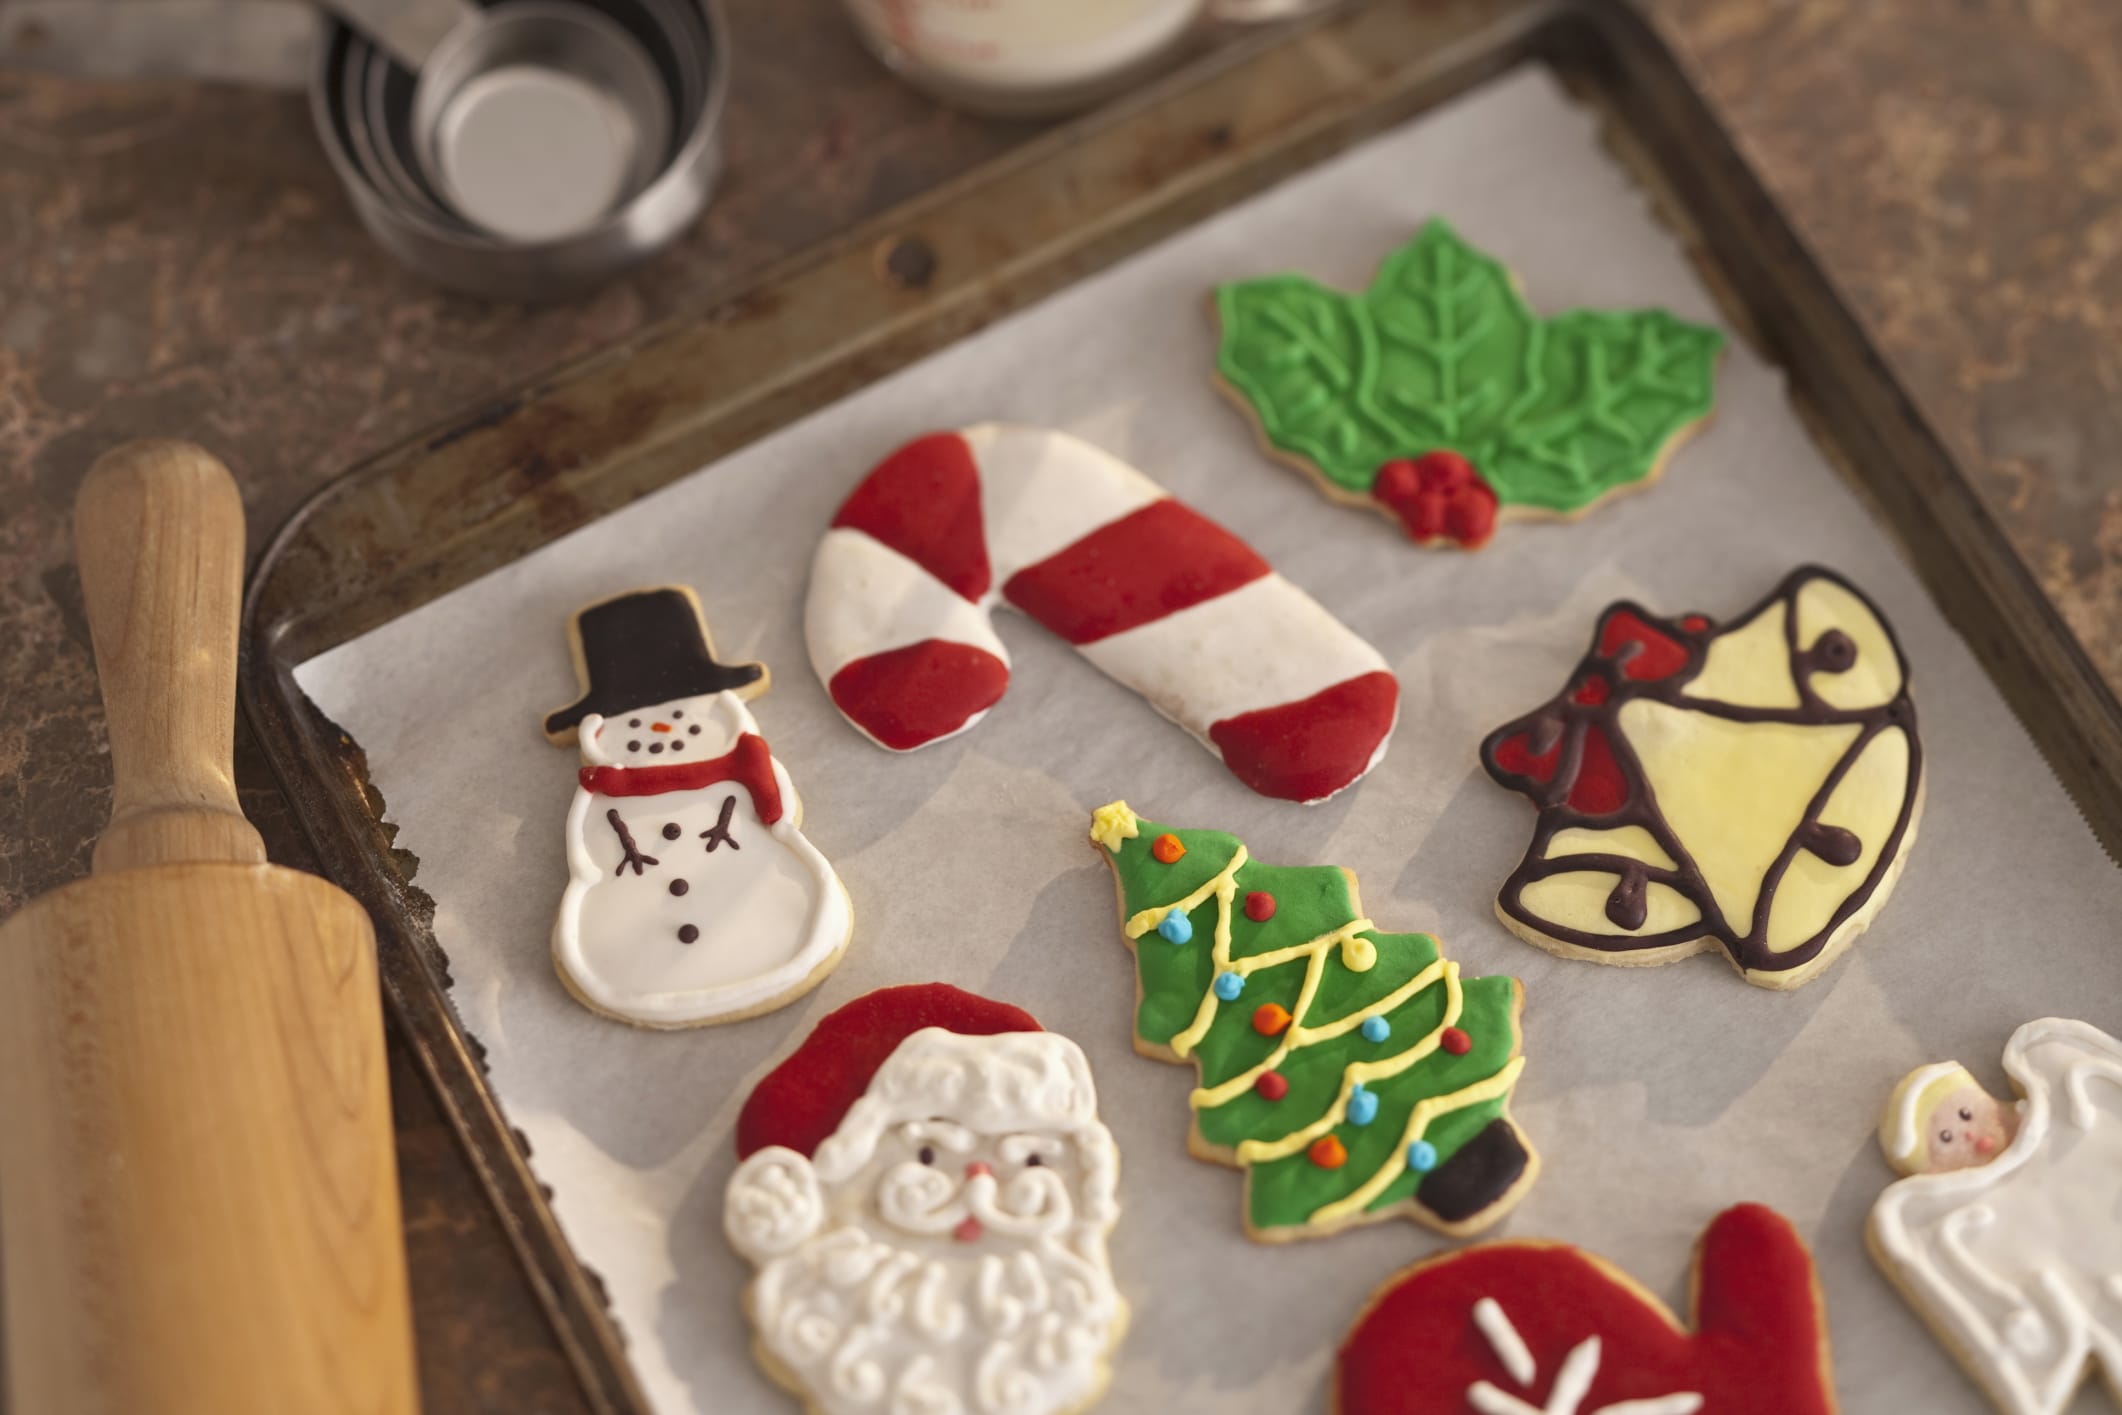 Biscotti Di Natale In Pasta Frolla.Regali Di Natale Fai Da Te I Biscotti Di Pasta Frolla Con La Glassa